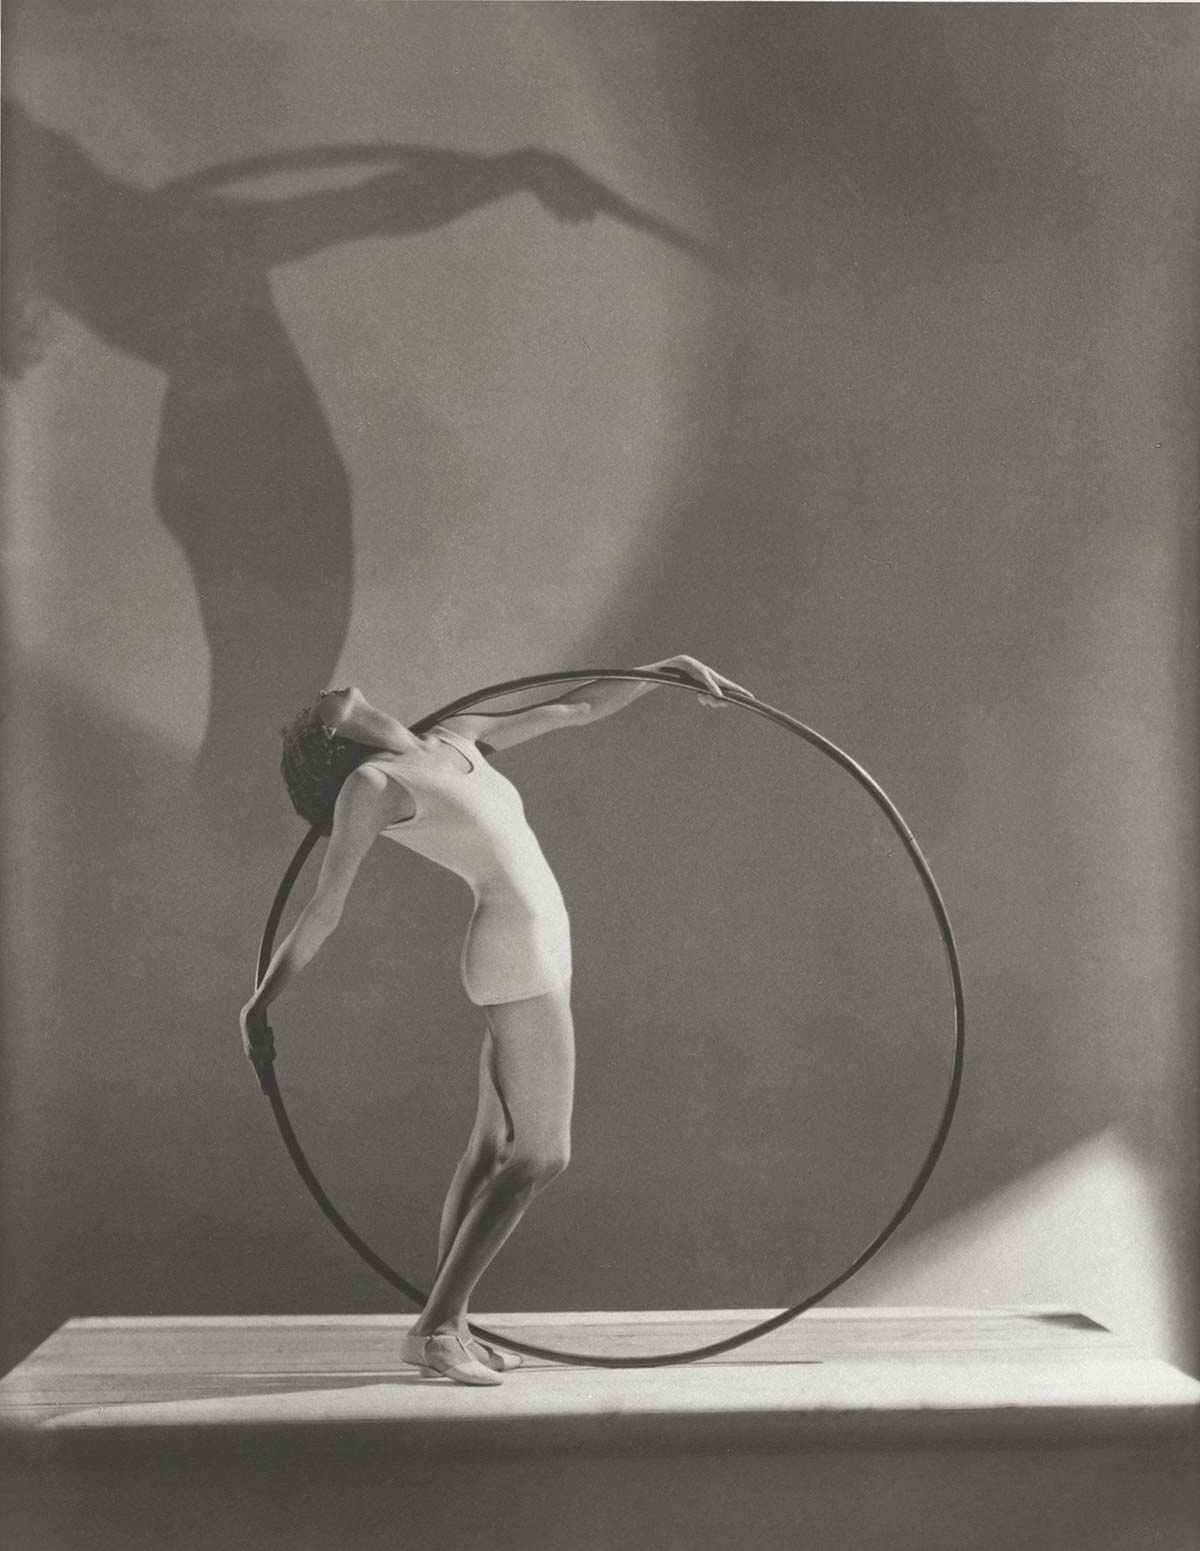 George Hoyningen-Huene, "Bathing Fashion", Paris 1930, © Estate George Hoyningen-Huene